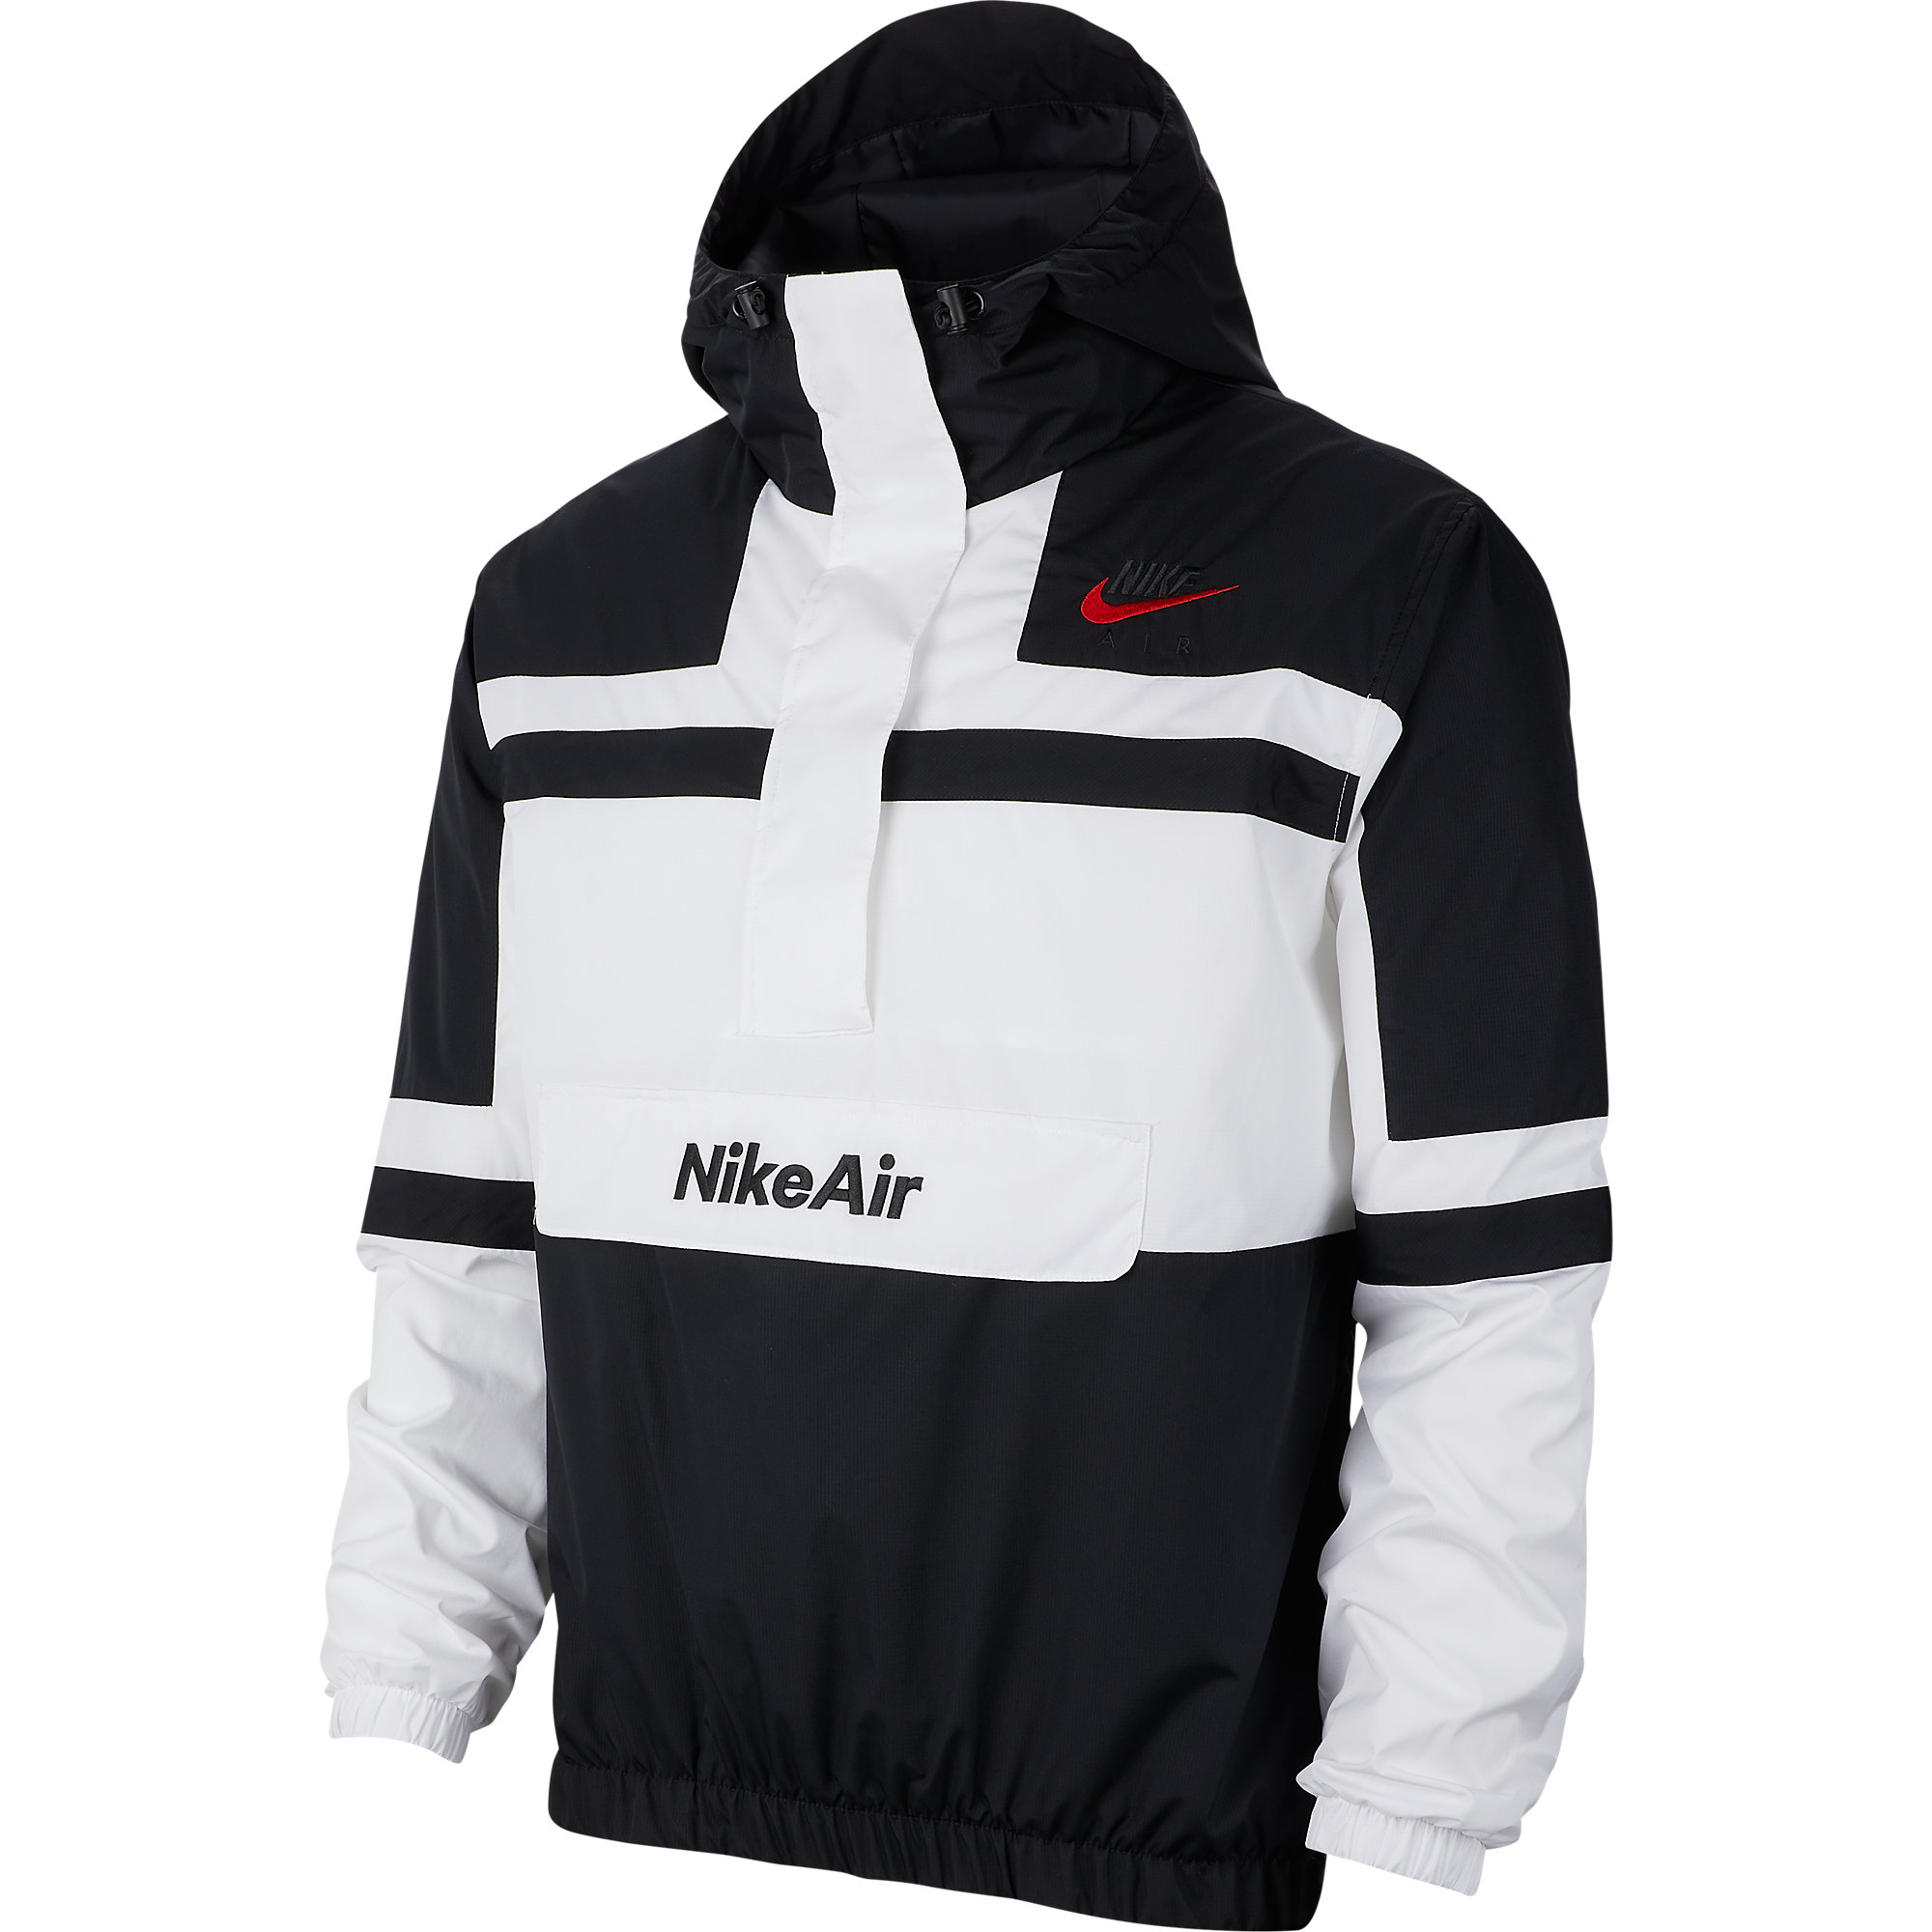 nike air black and white jacket